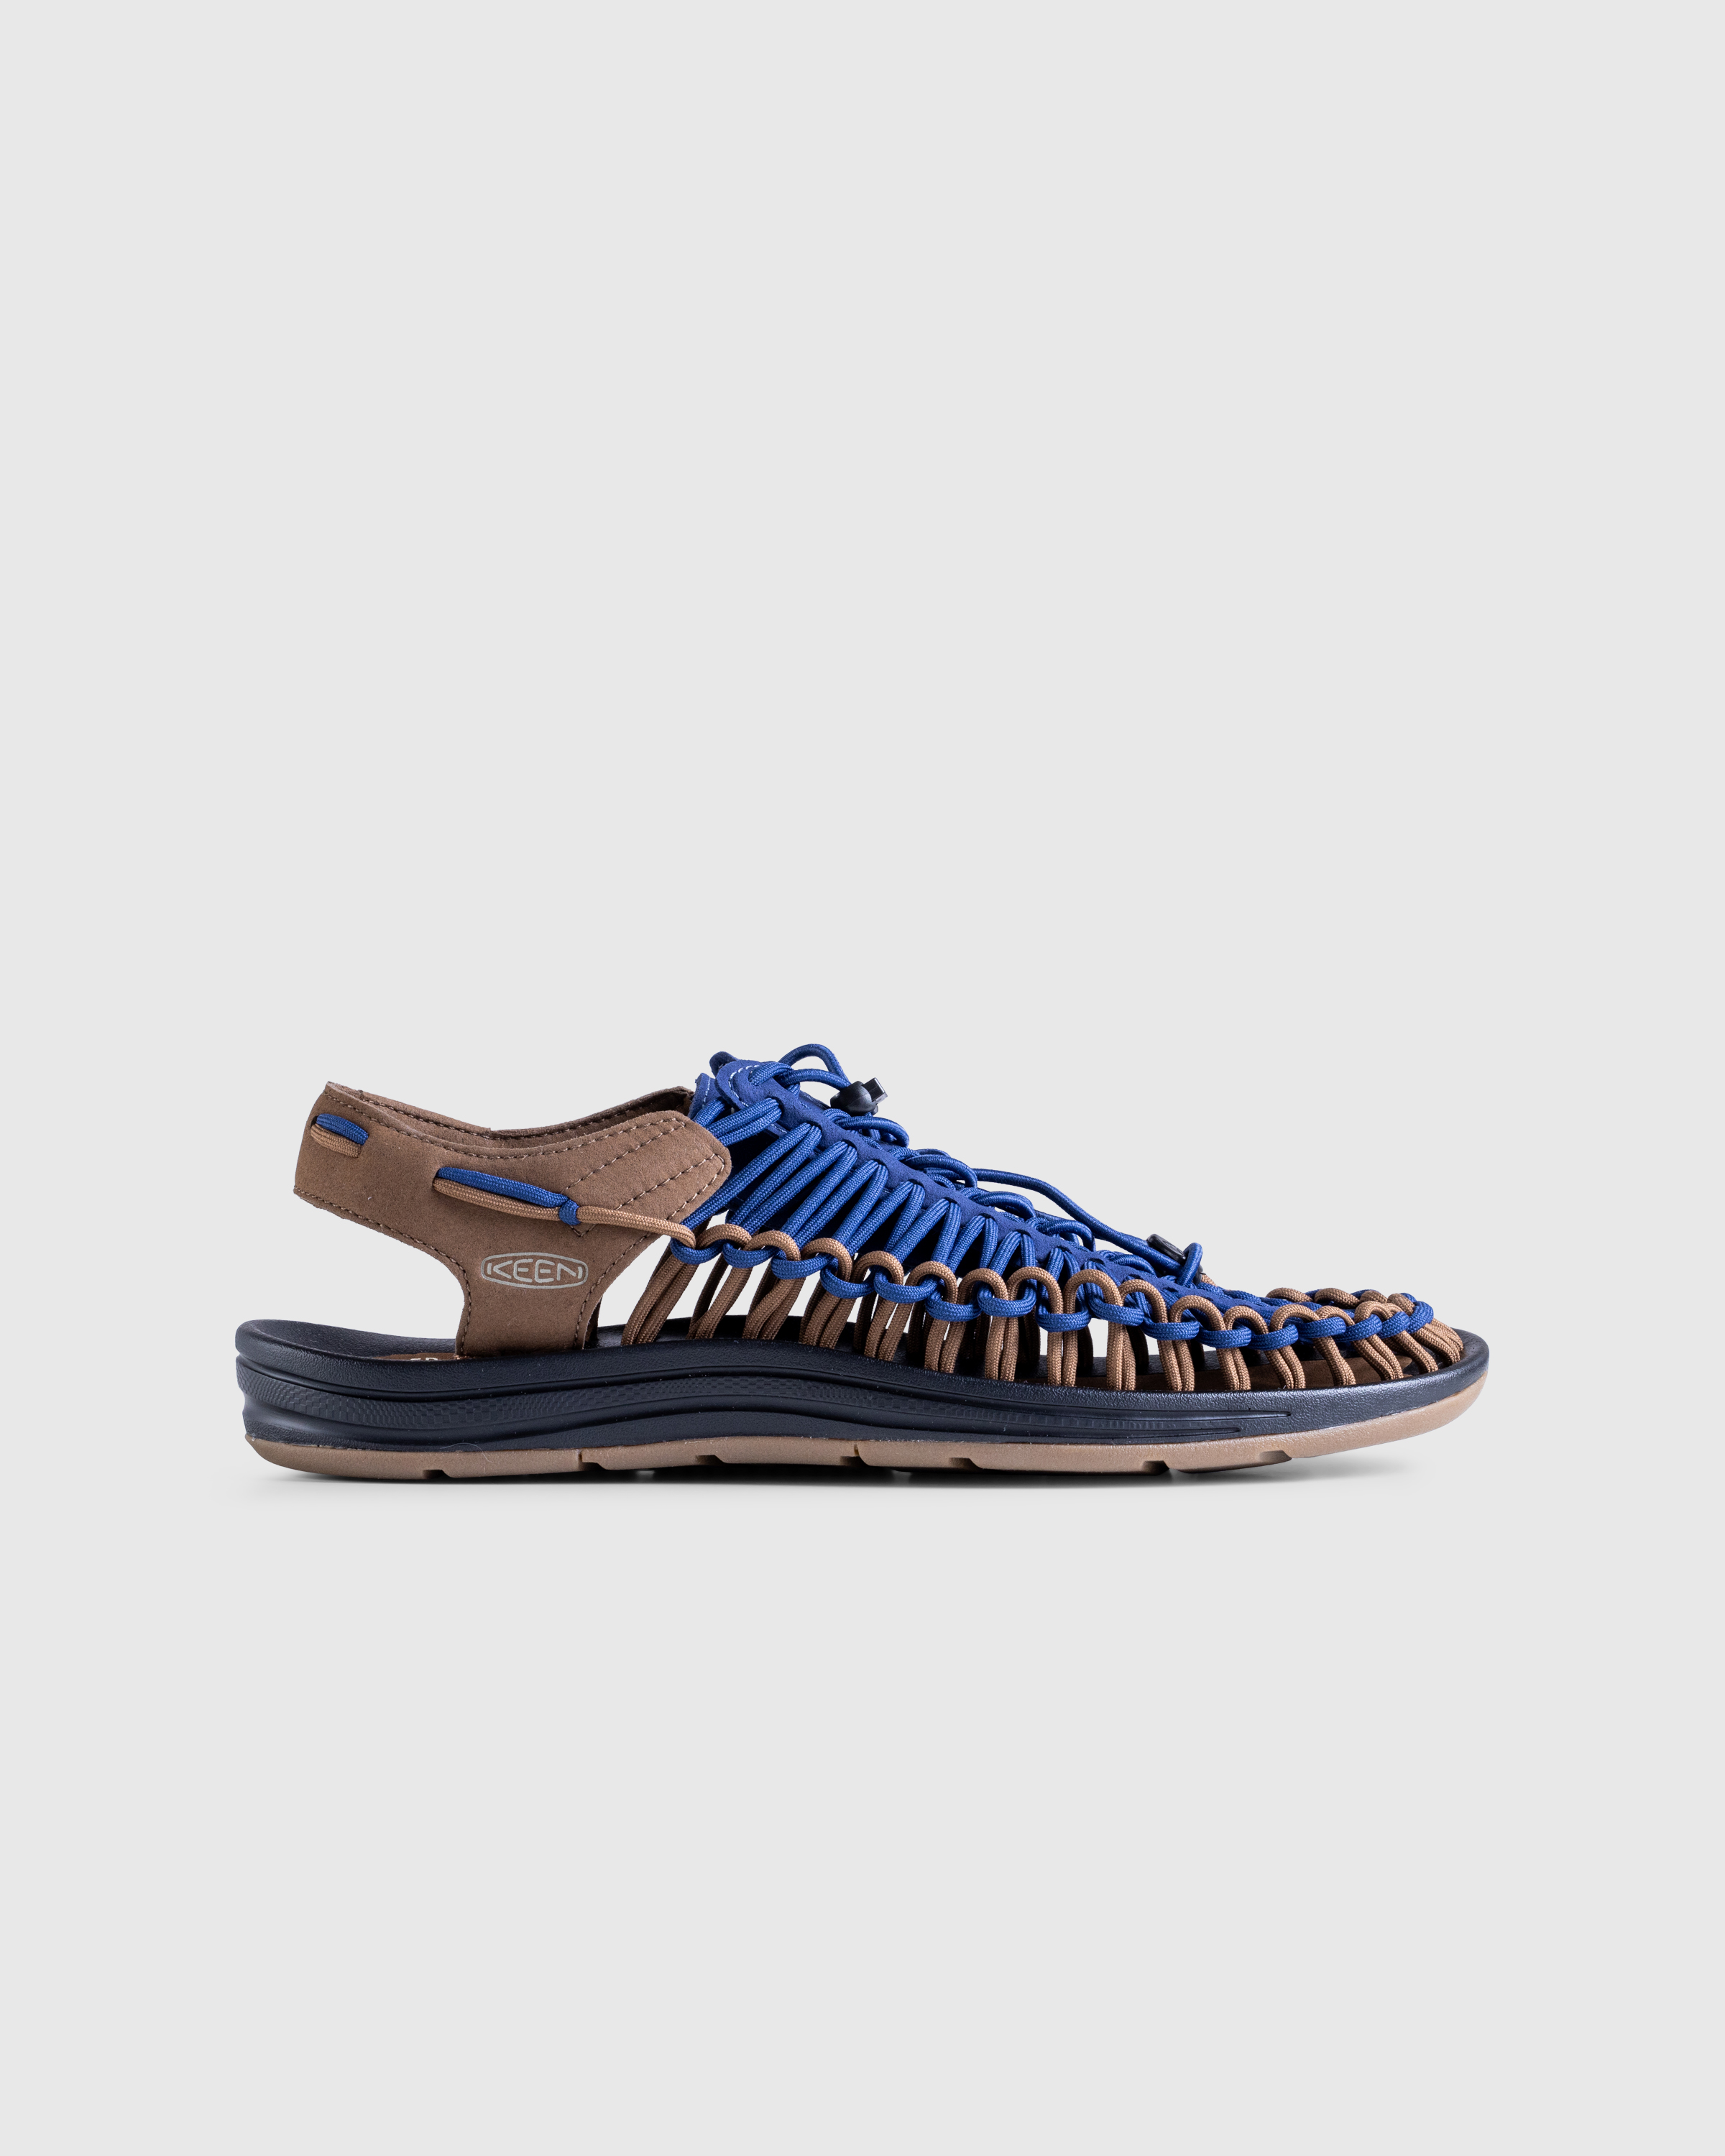 Keen – Uneek M Naval Academy/Bison - Sandals - Blue - Image 1